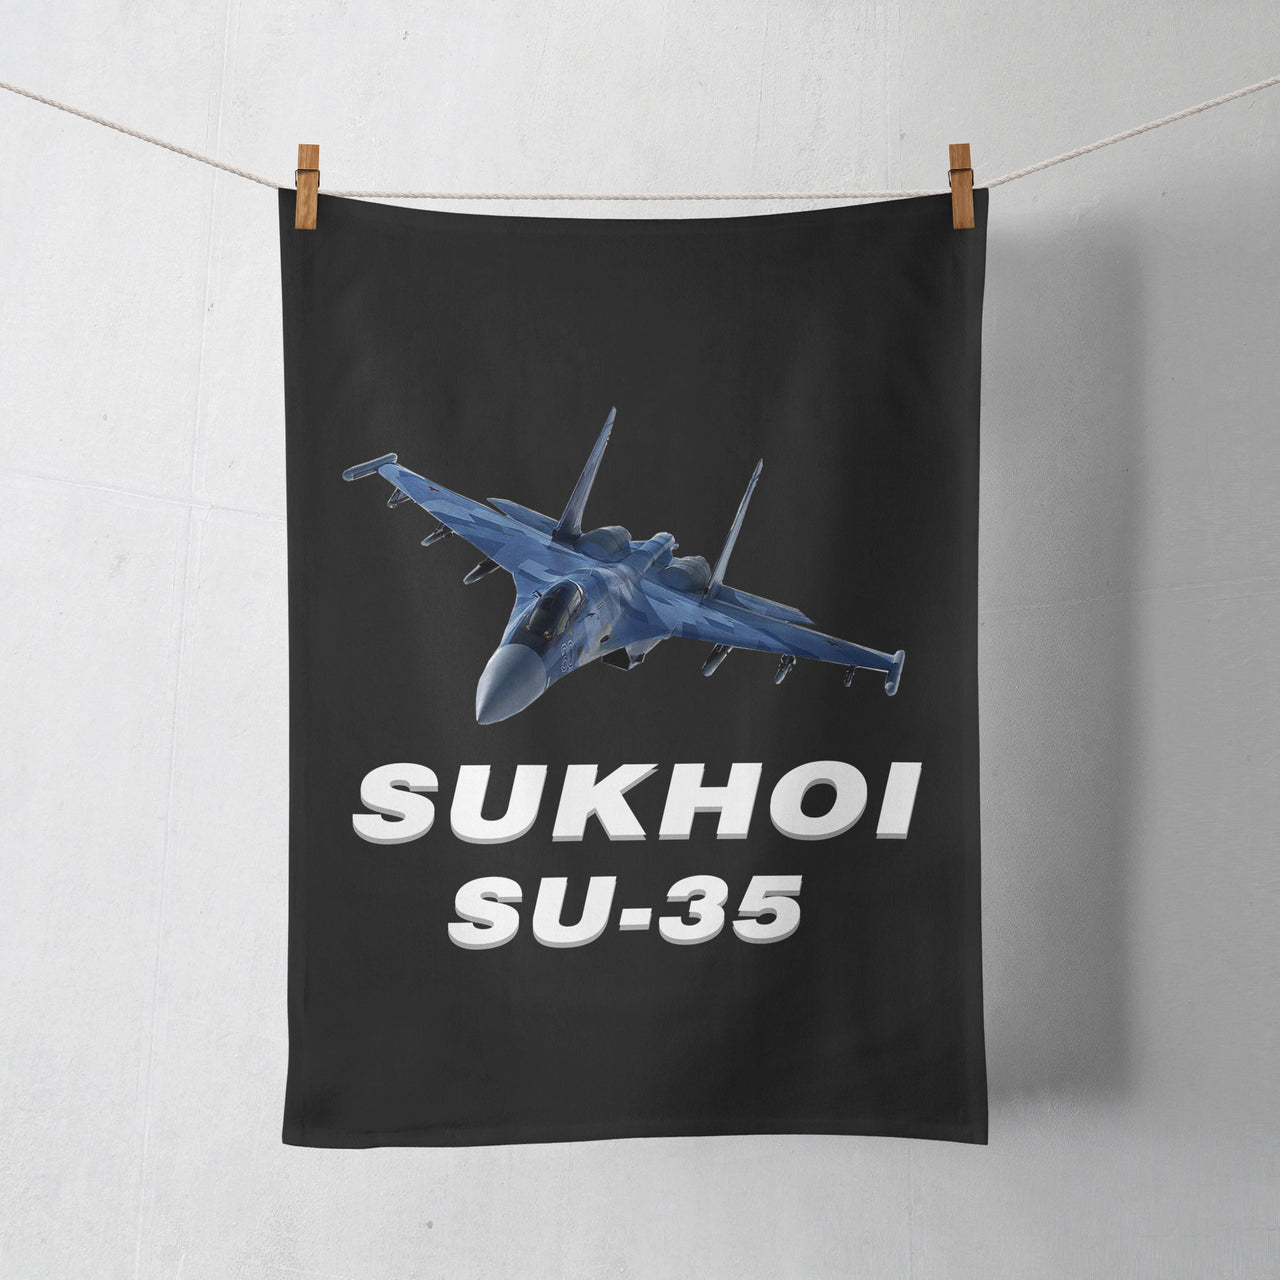 The Sukhoi SU-35 Designed Towels